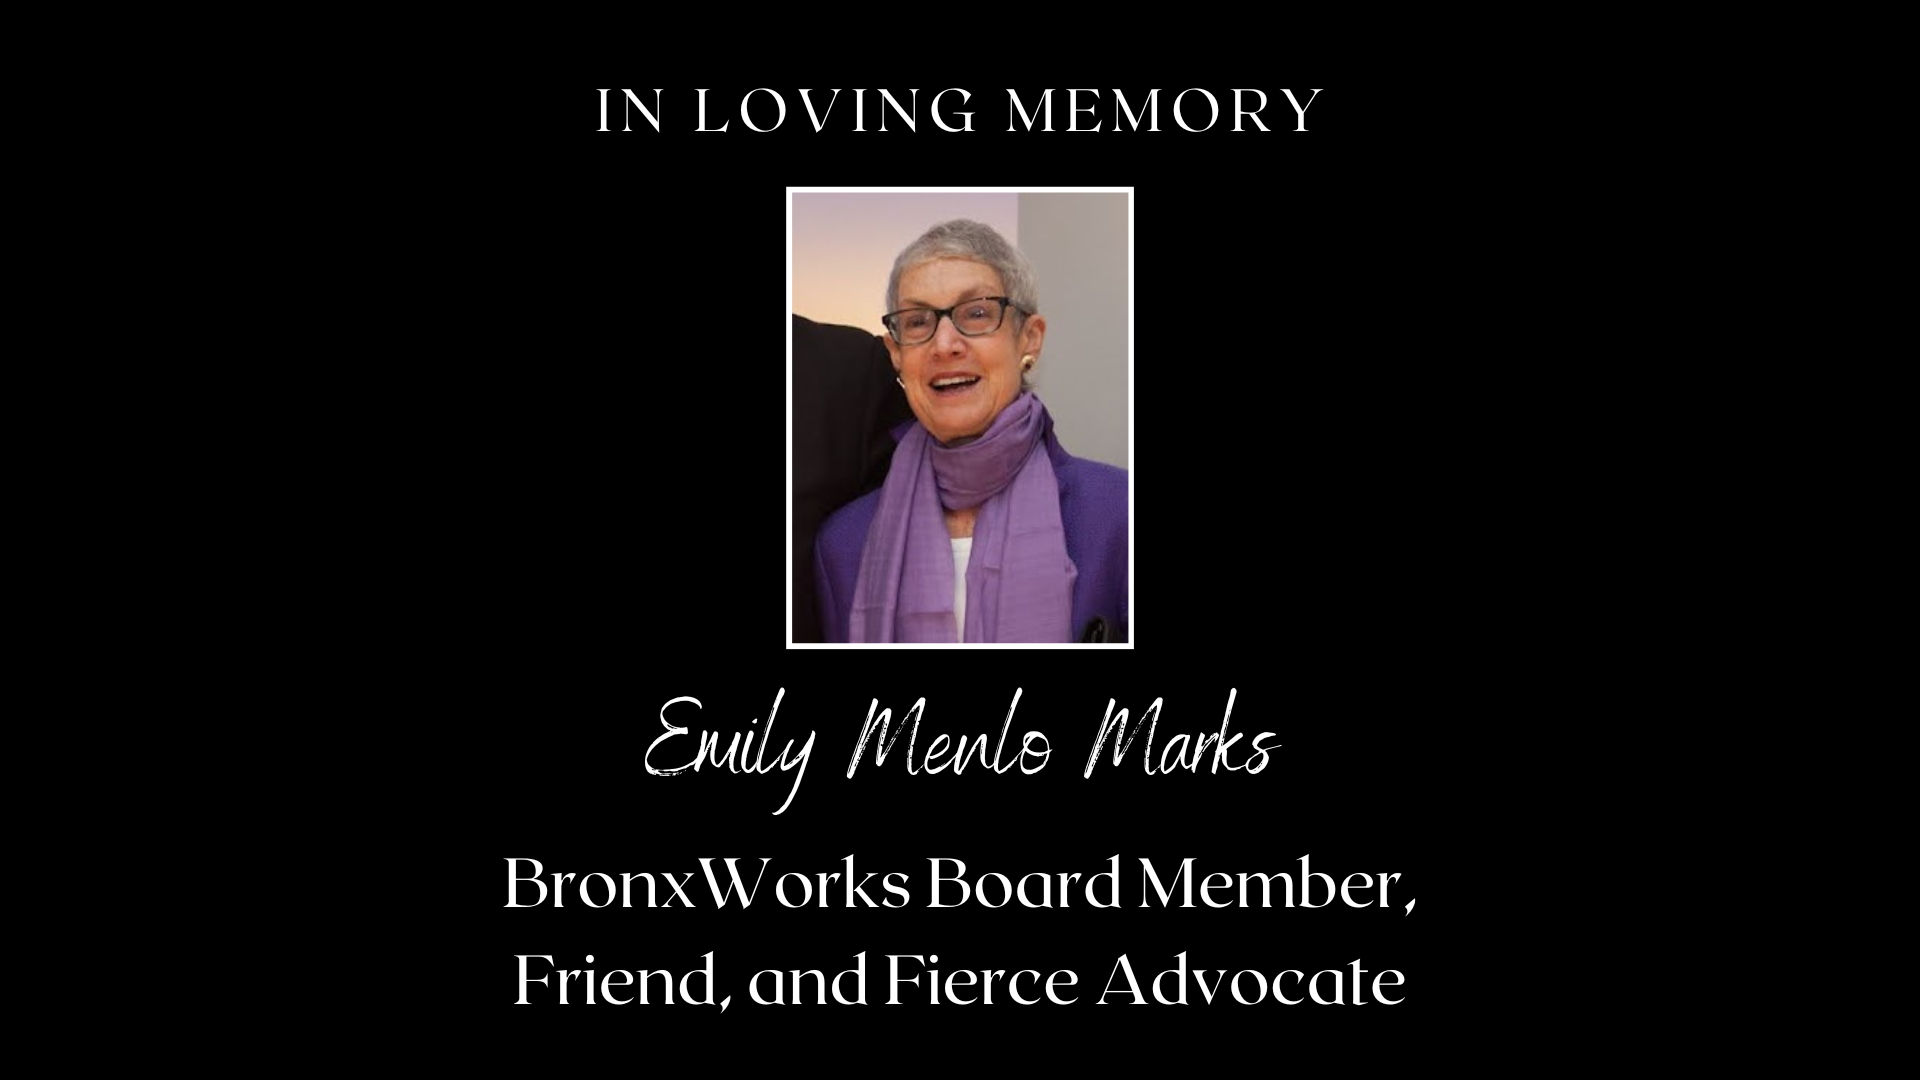 In Loving Memory of Emily Menlo Marks. BronxWorks Board Member, Friend, and Fierce Advocate